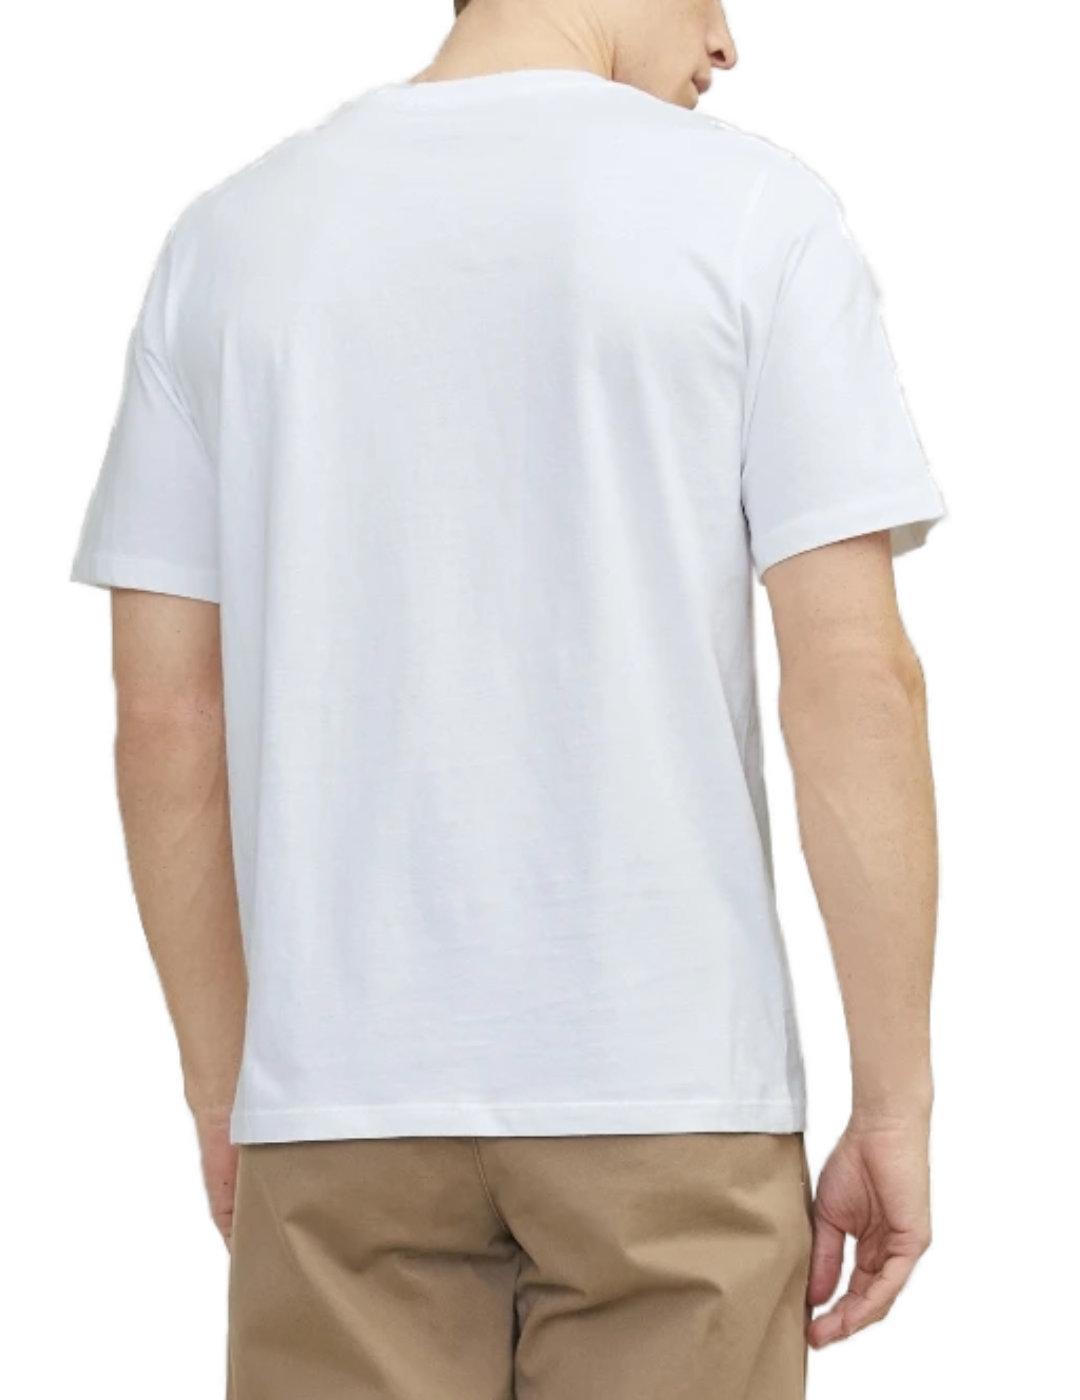 Camiseta Jack&Jones Jack blanca manga corta para hombre